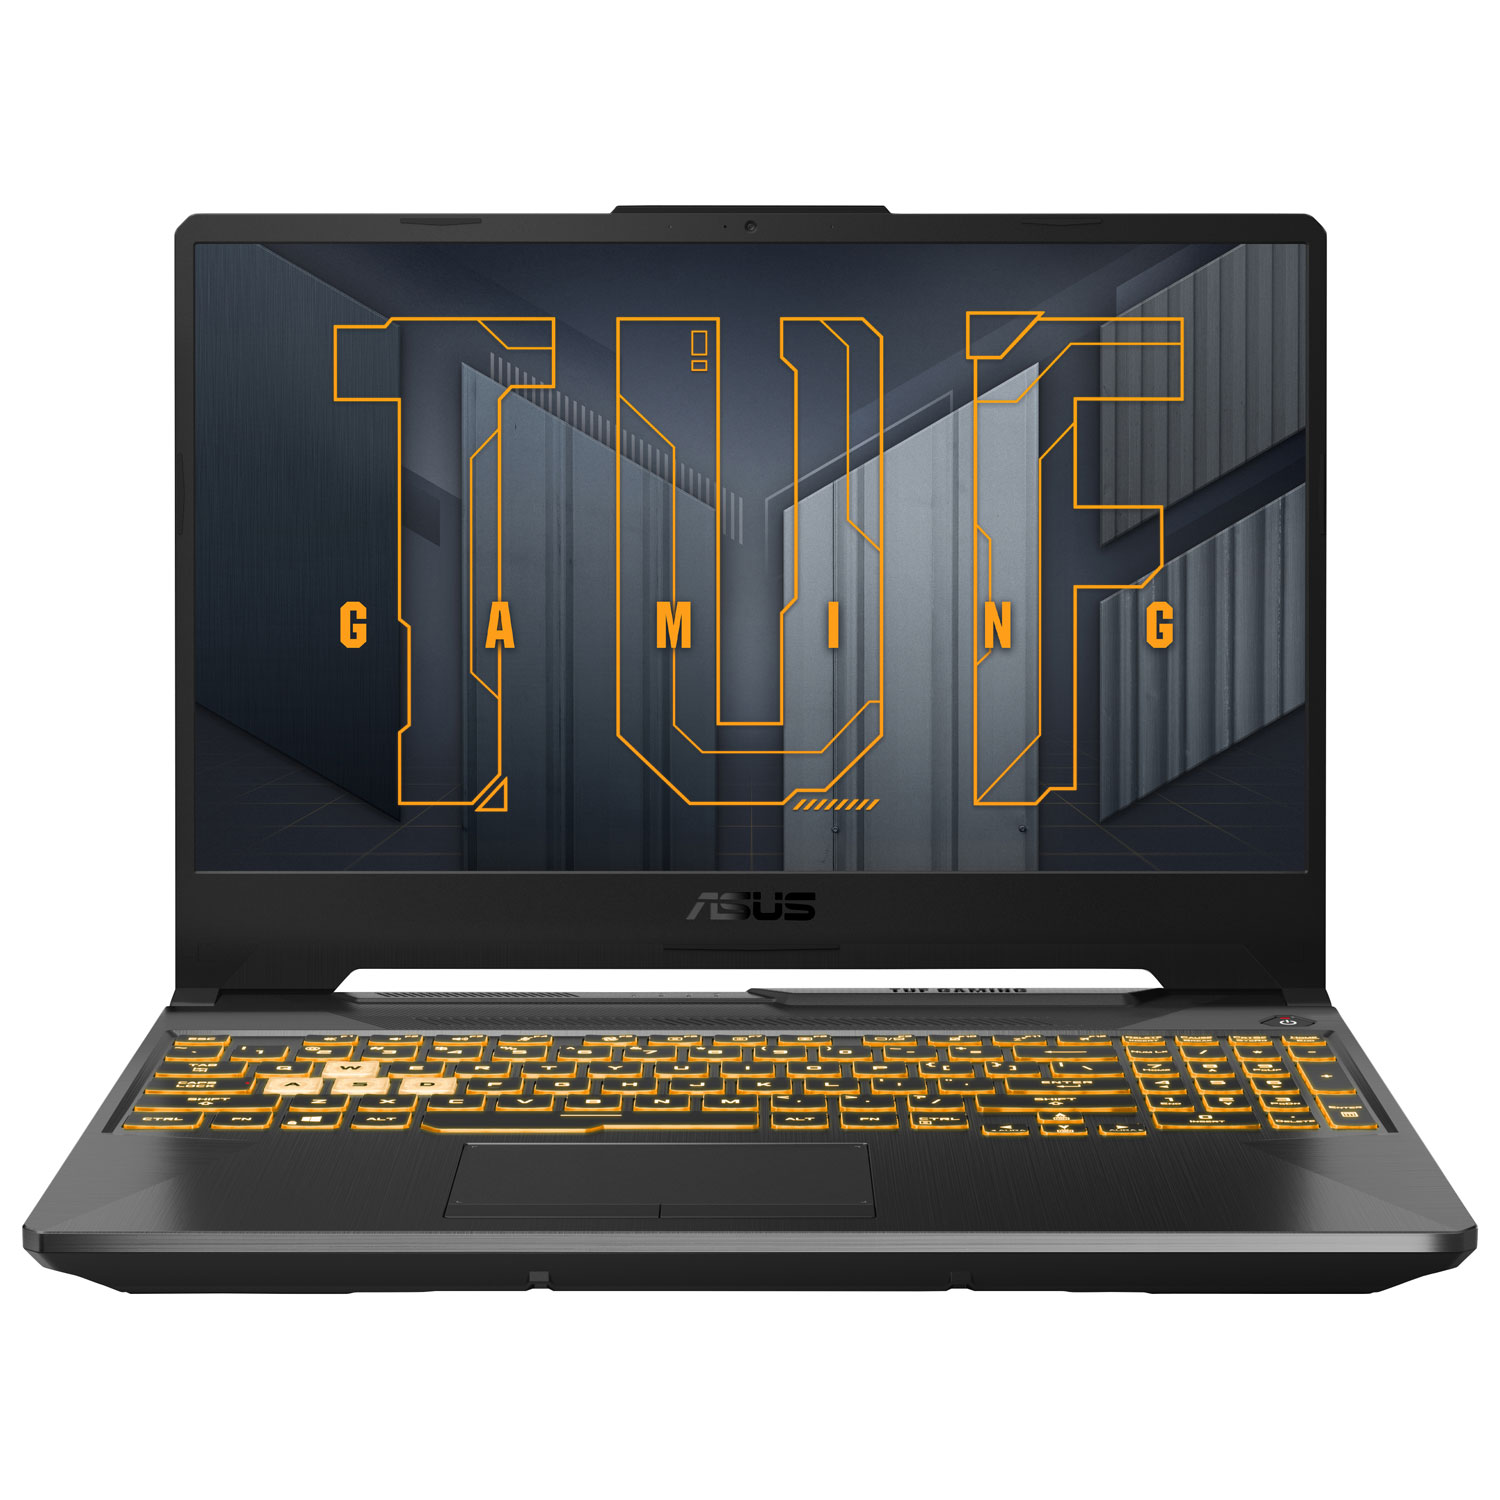 ASUS TUF F15 15.6" Gaming Laptop - Grey (Intel Core i7-11800H/512GB SSD/16GB RAM/RTX 3060/Win10)